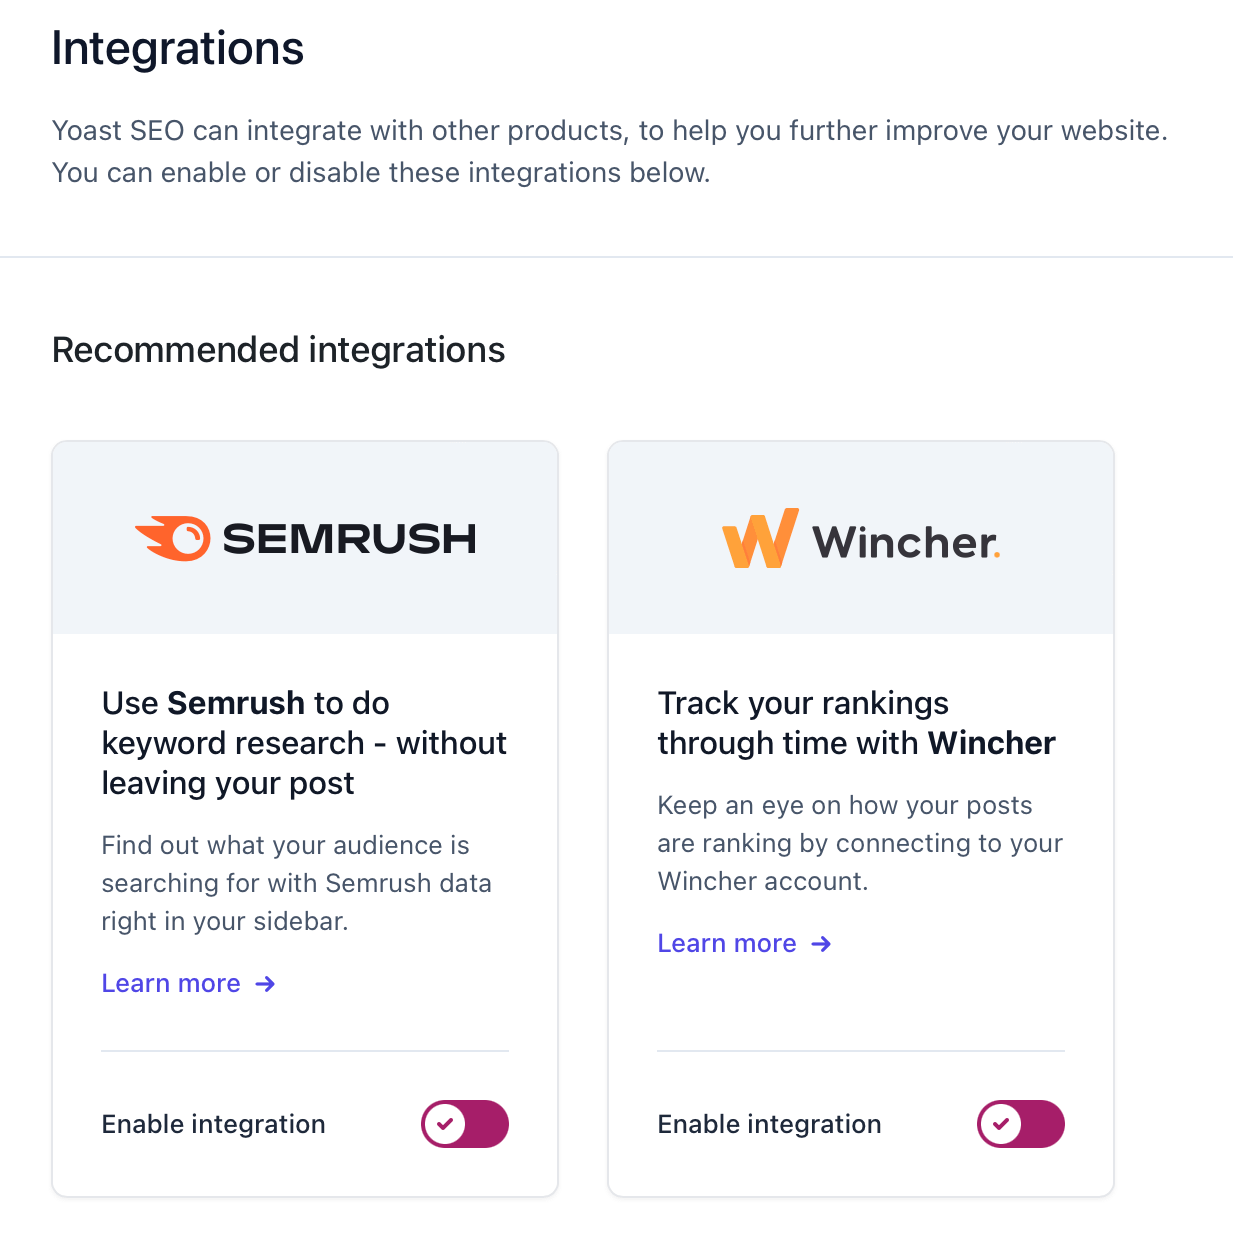 Integrations inside the Yoast SEO tutorial.